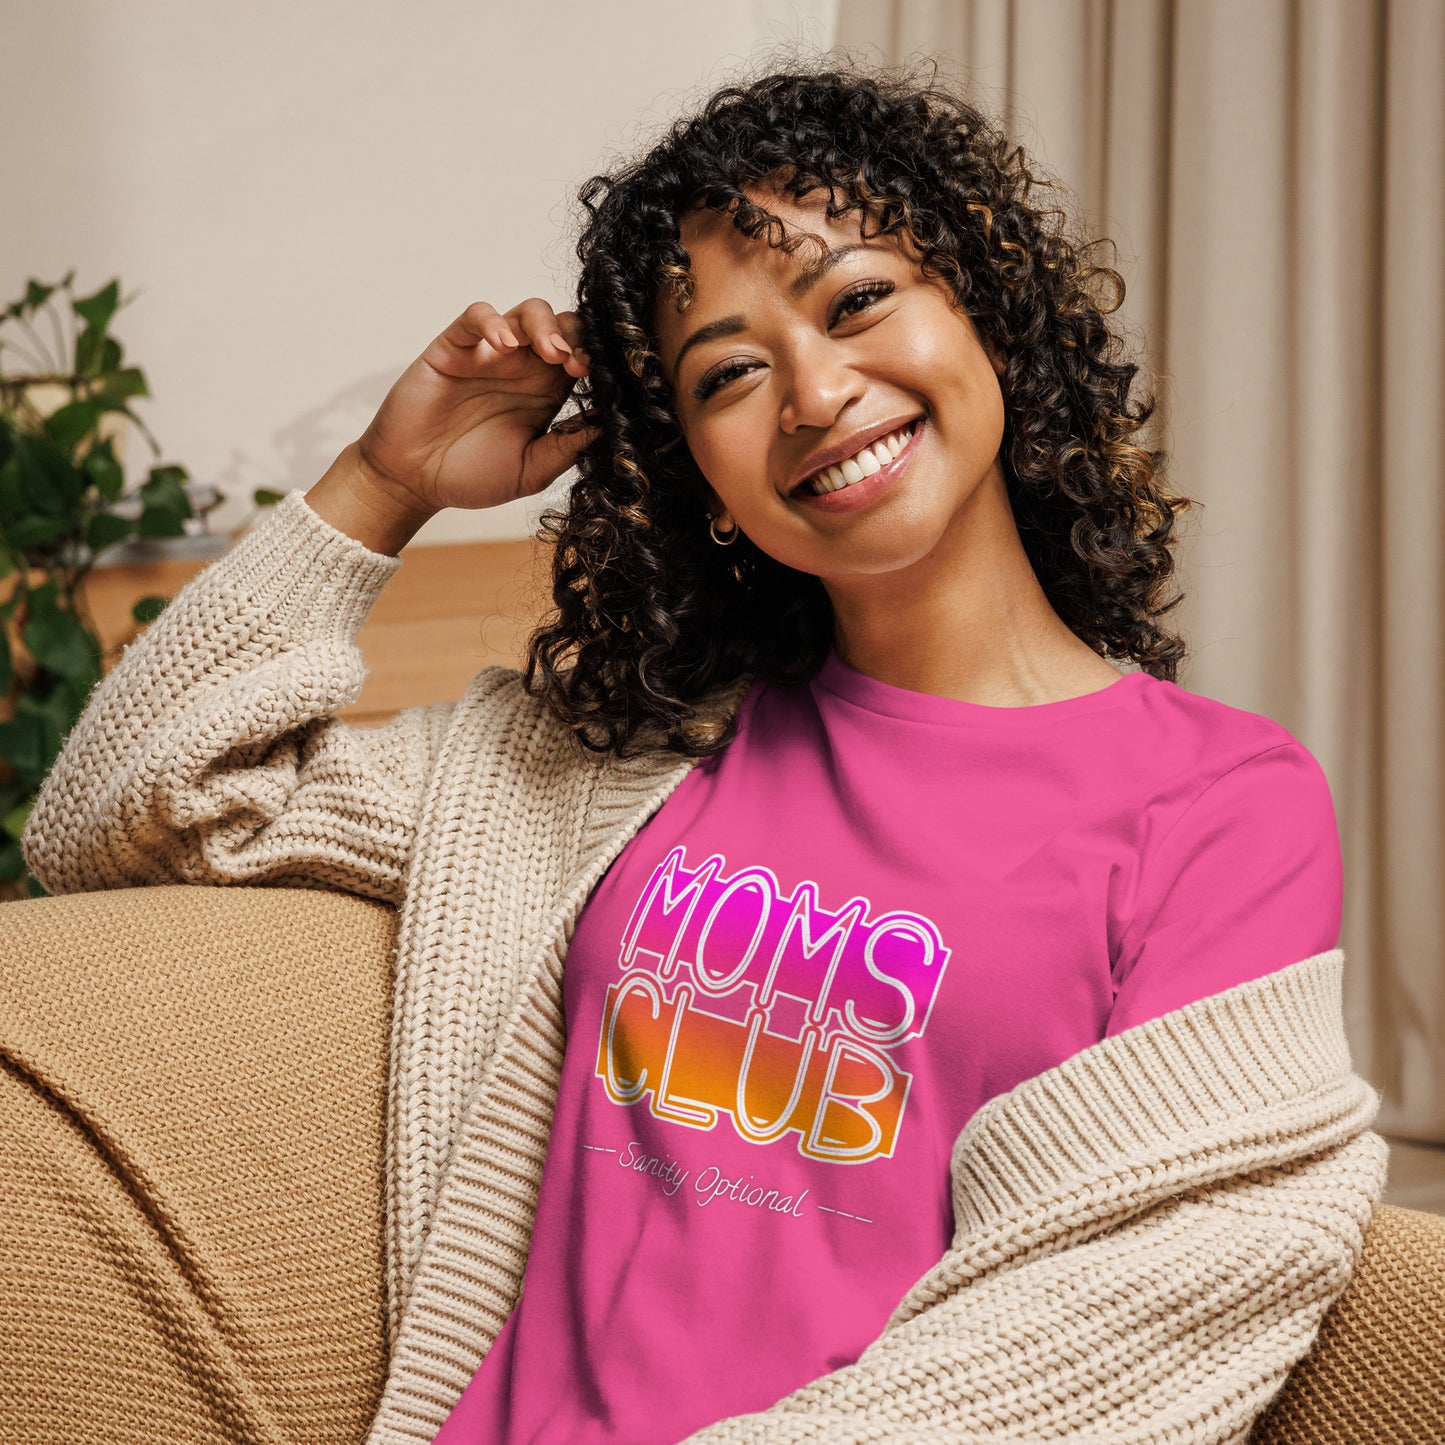 Moms Club Sanity Optional  Women's T-Shirt